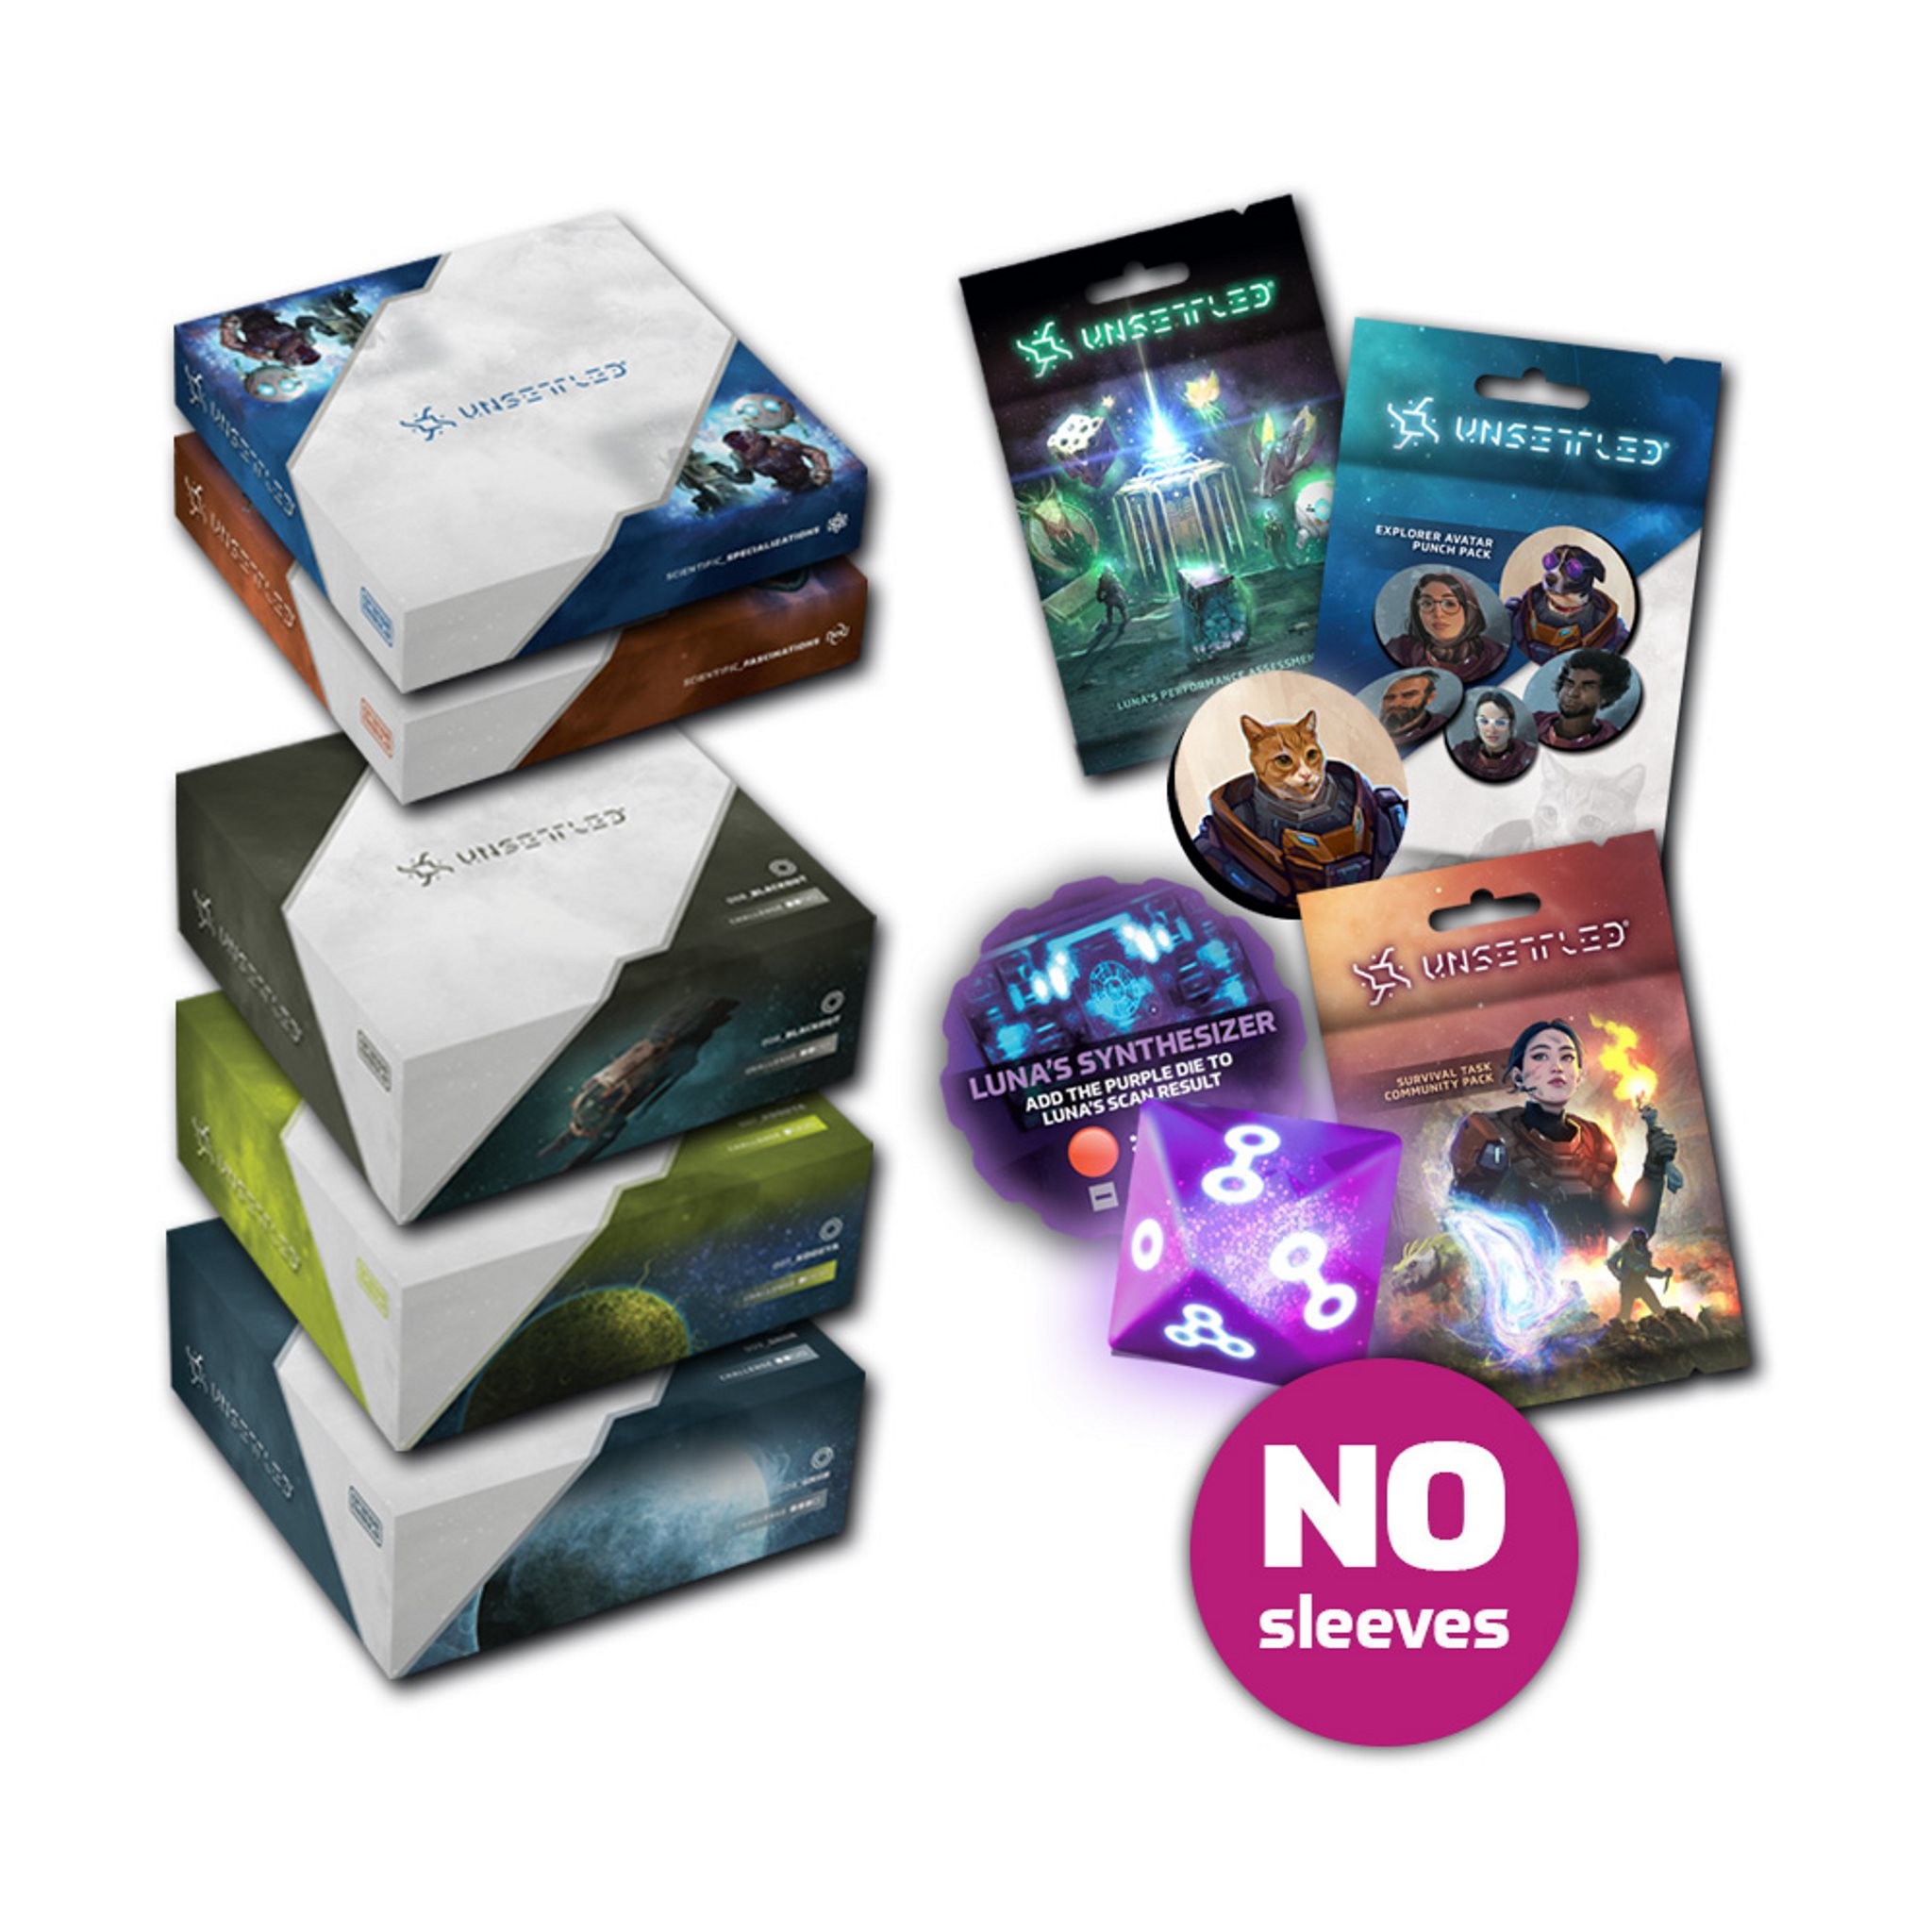 Unsettled Kickstarter edition - Nebula